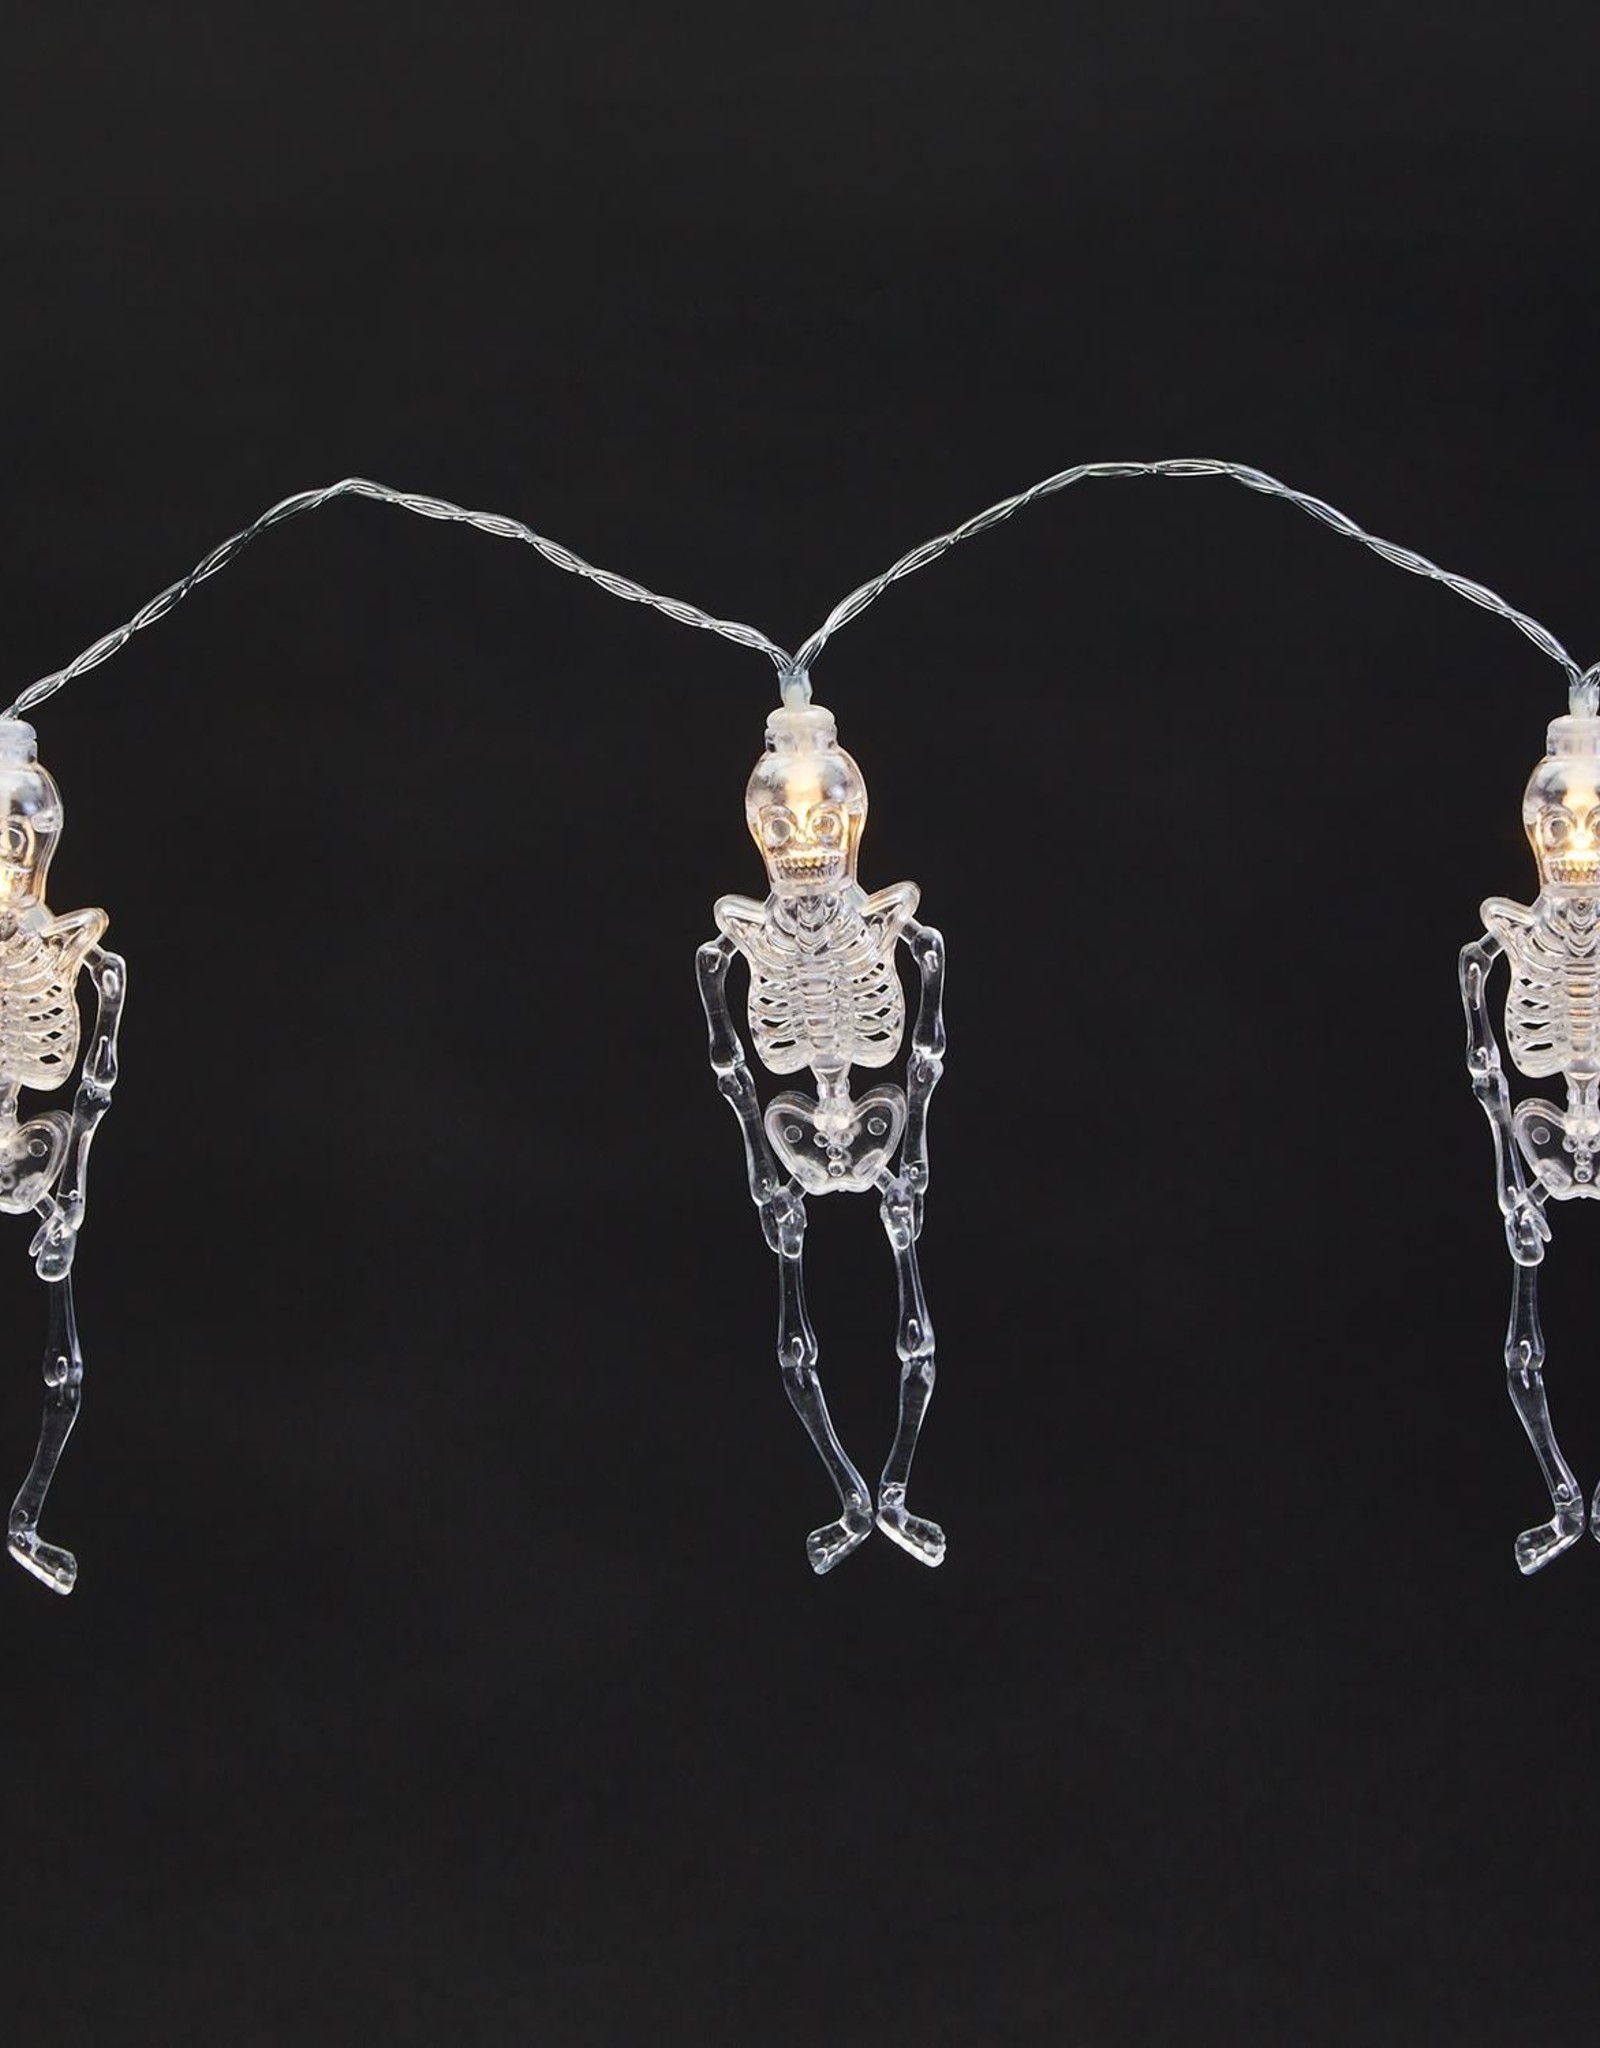 Two's Comapany Skeleton String Lights